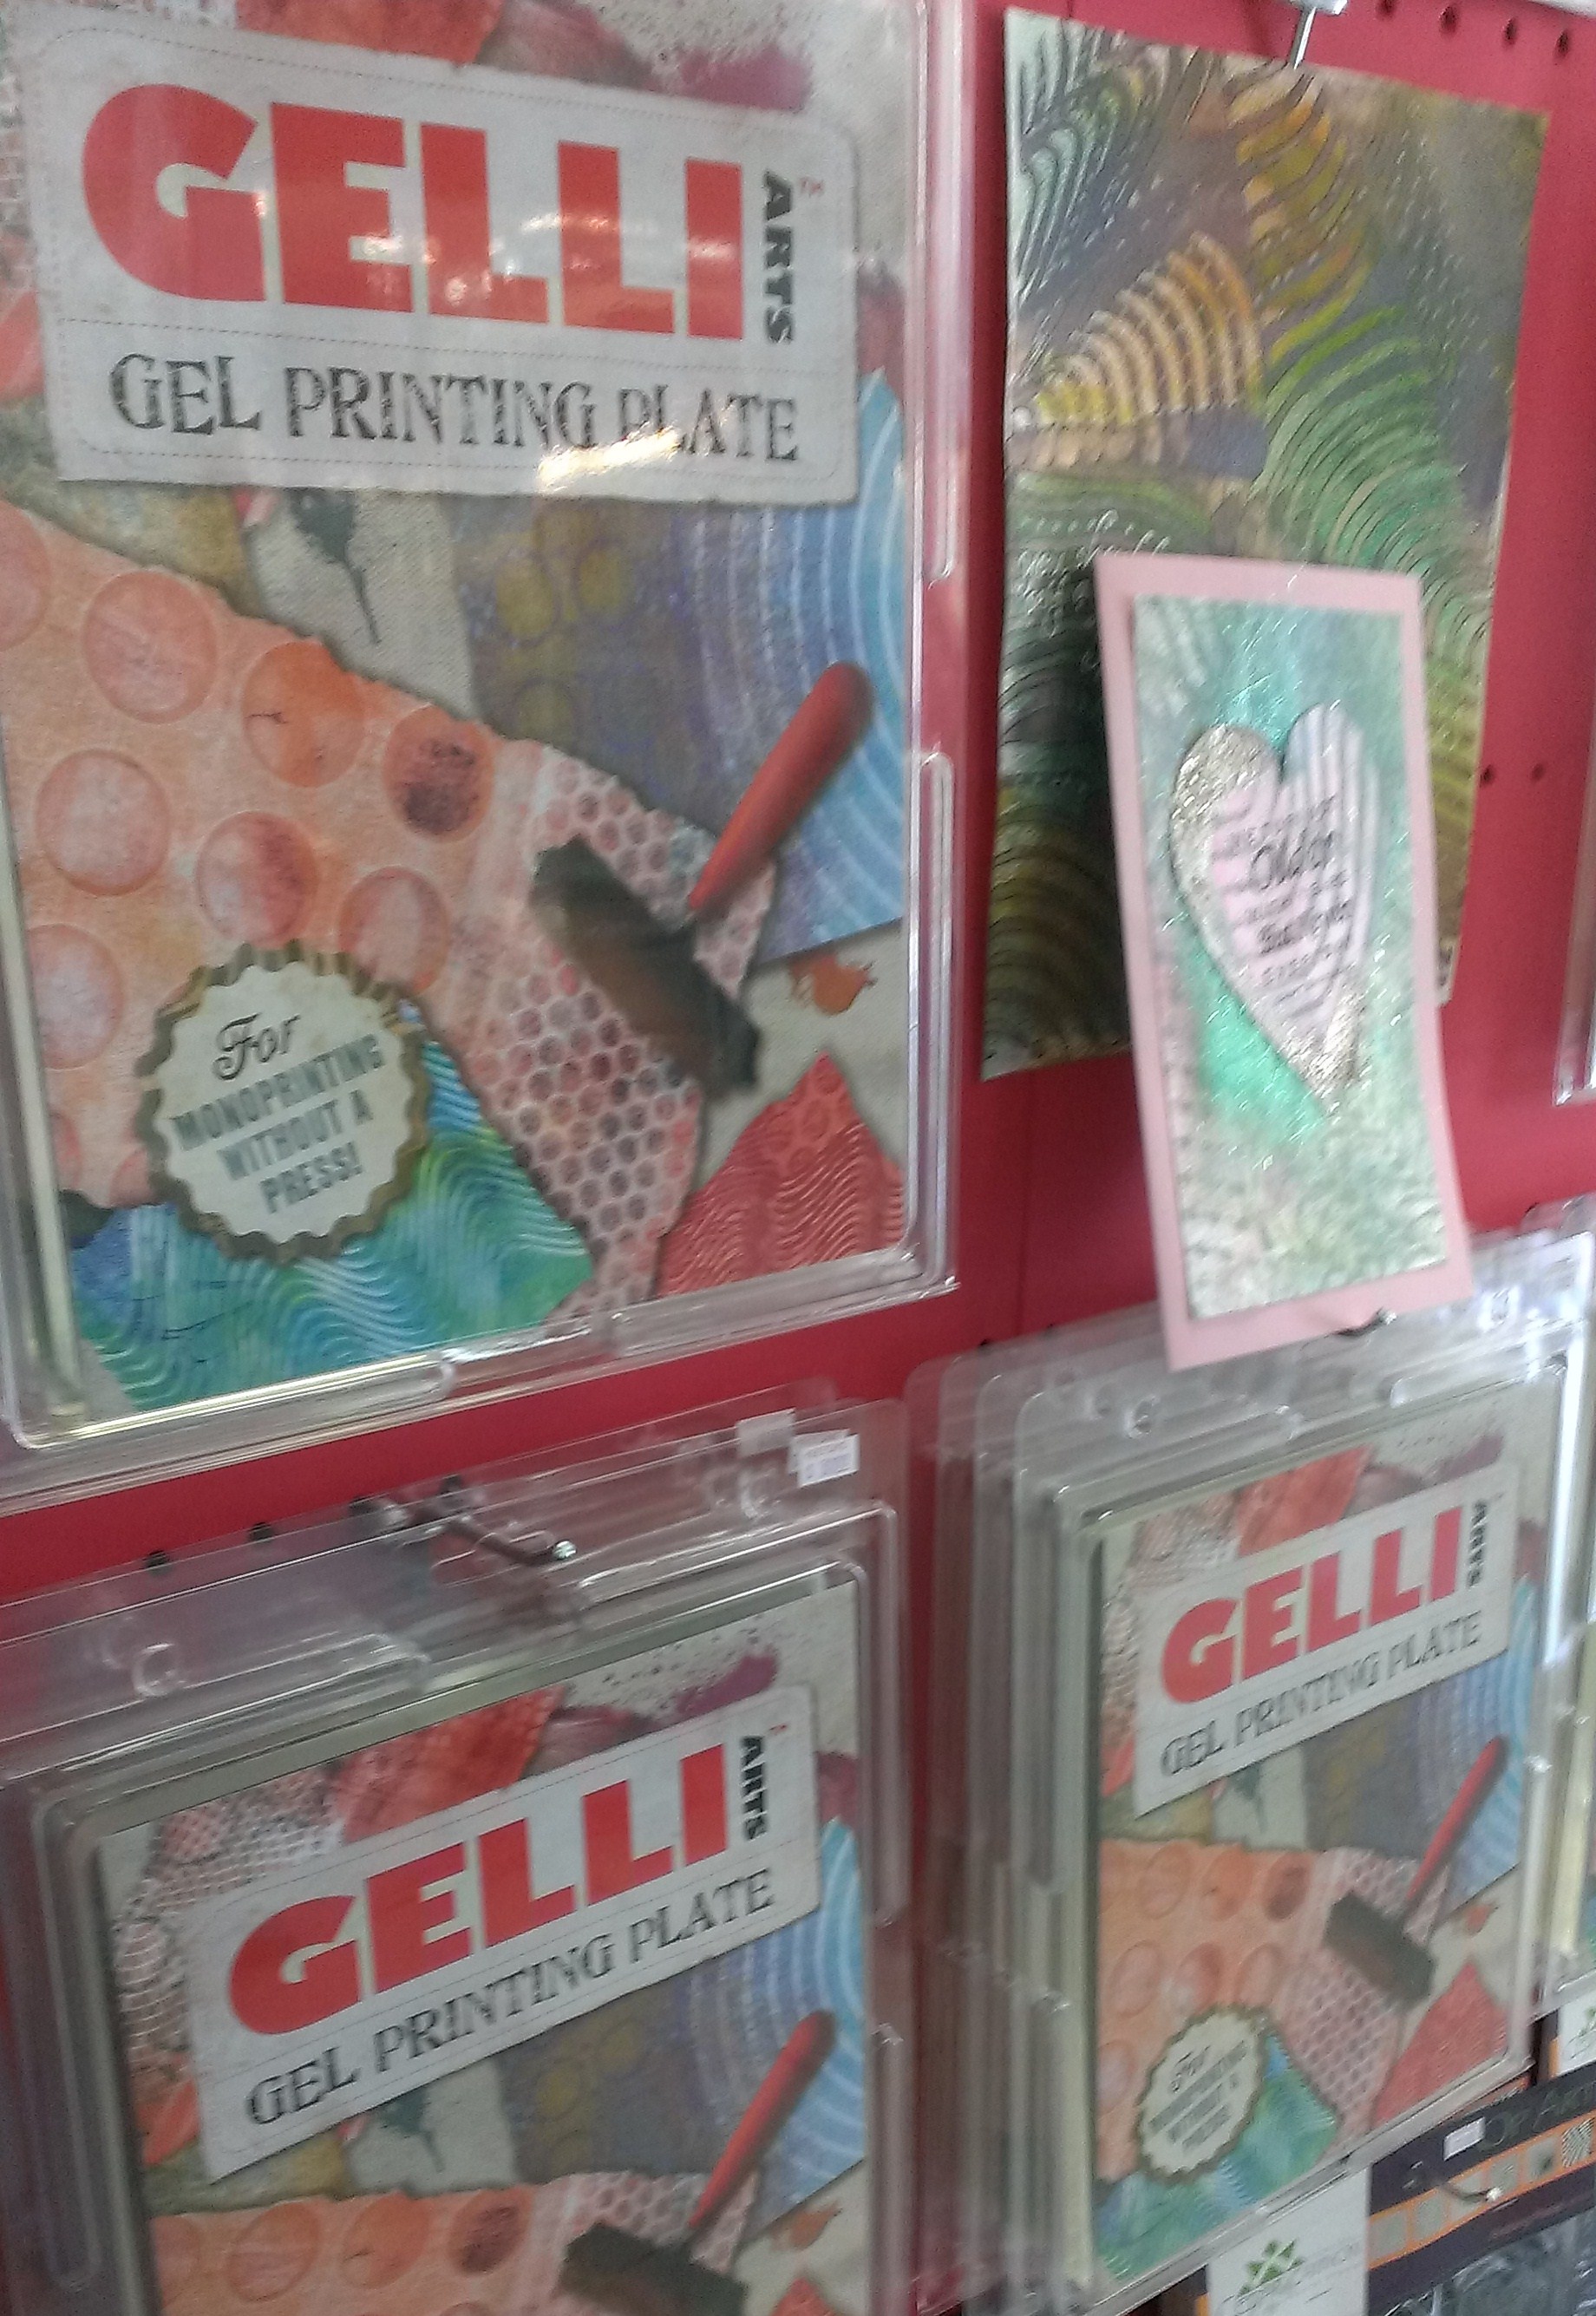 Gelli Arts 8 x 10 Gel Printing Plate, Brand New